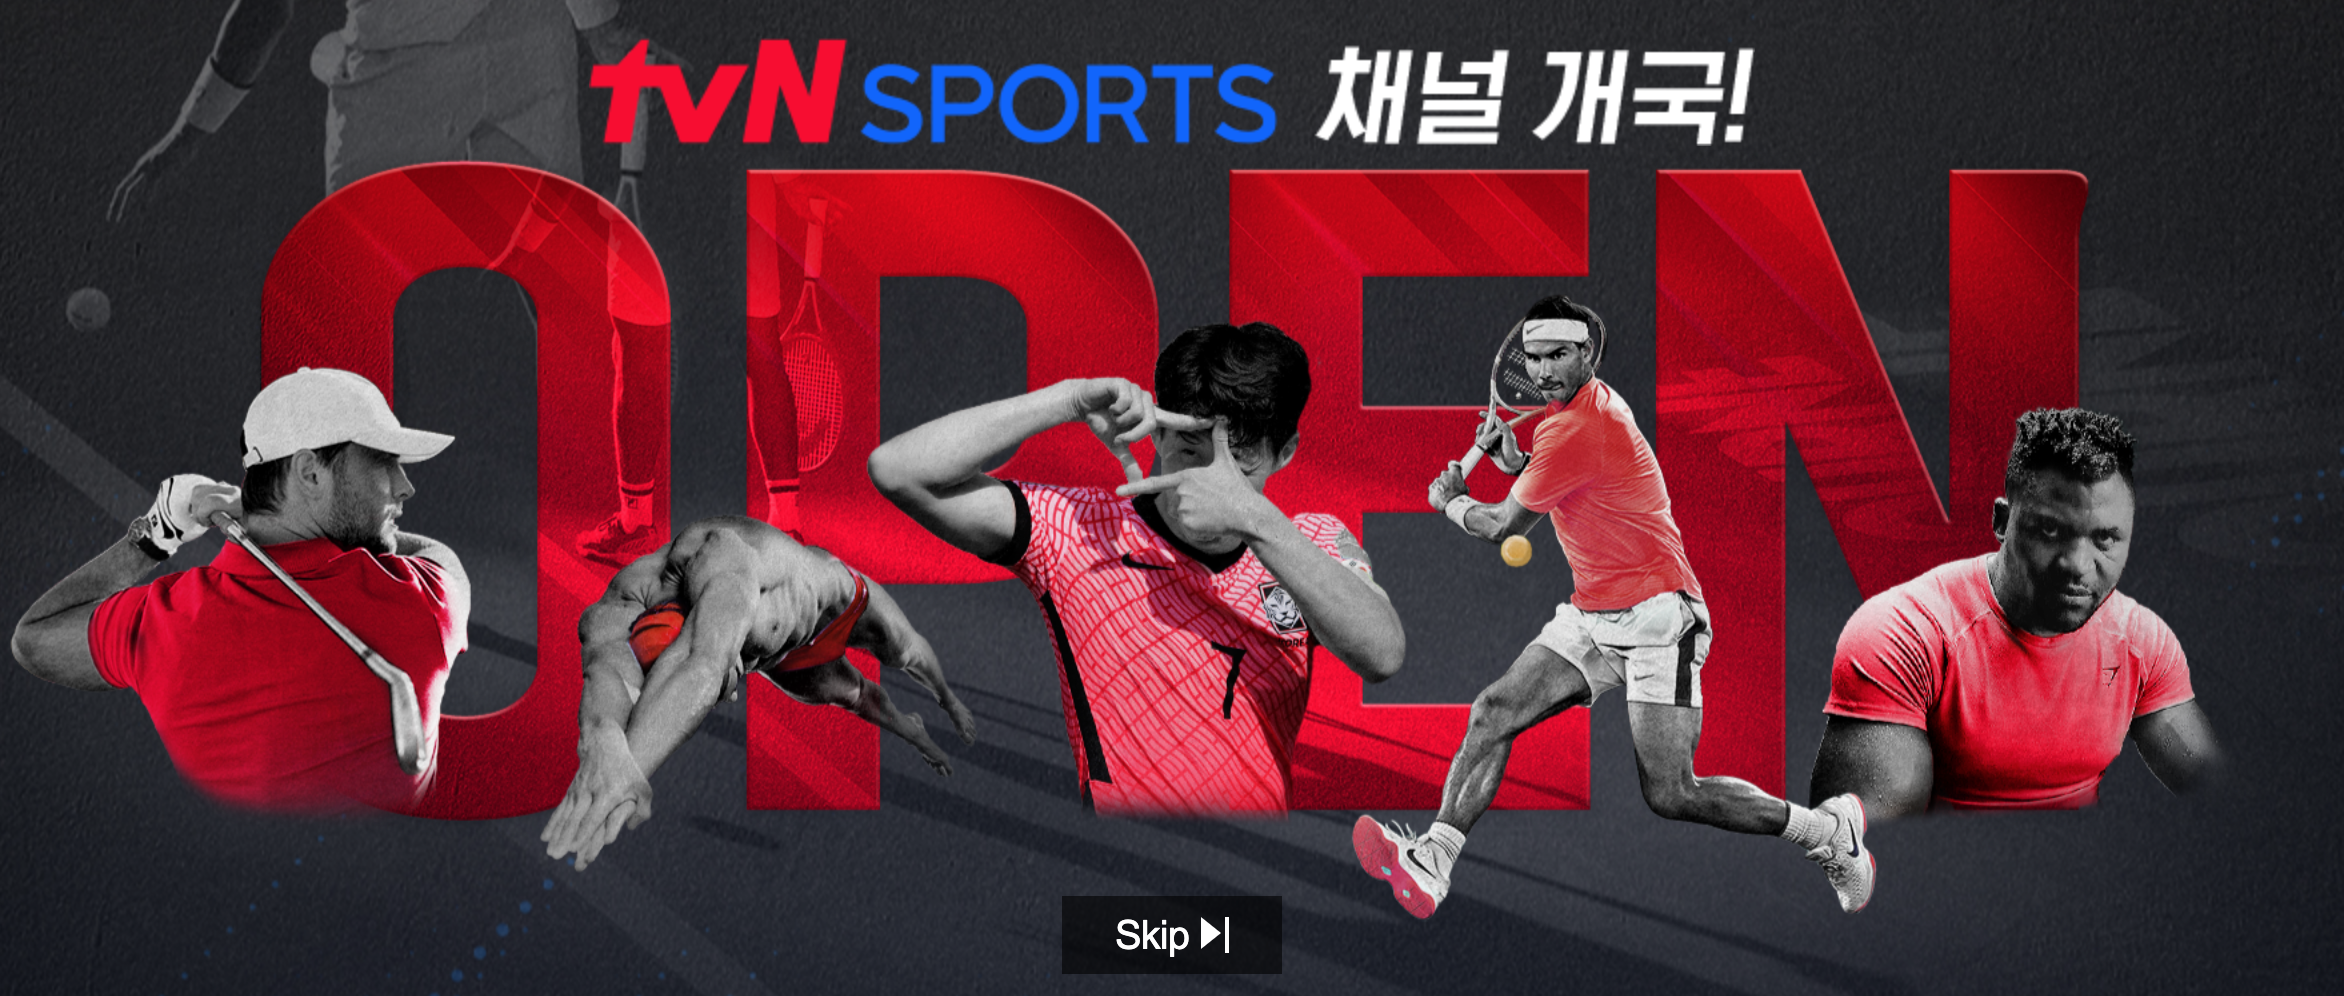 tvN SPORTS 온에어 티비엔 스포츠 실시간 시청방법을 알려드립니다